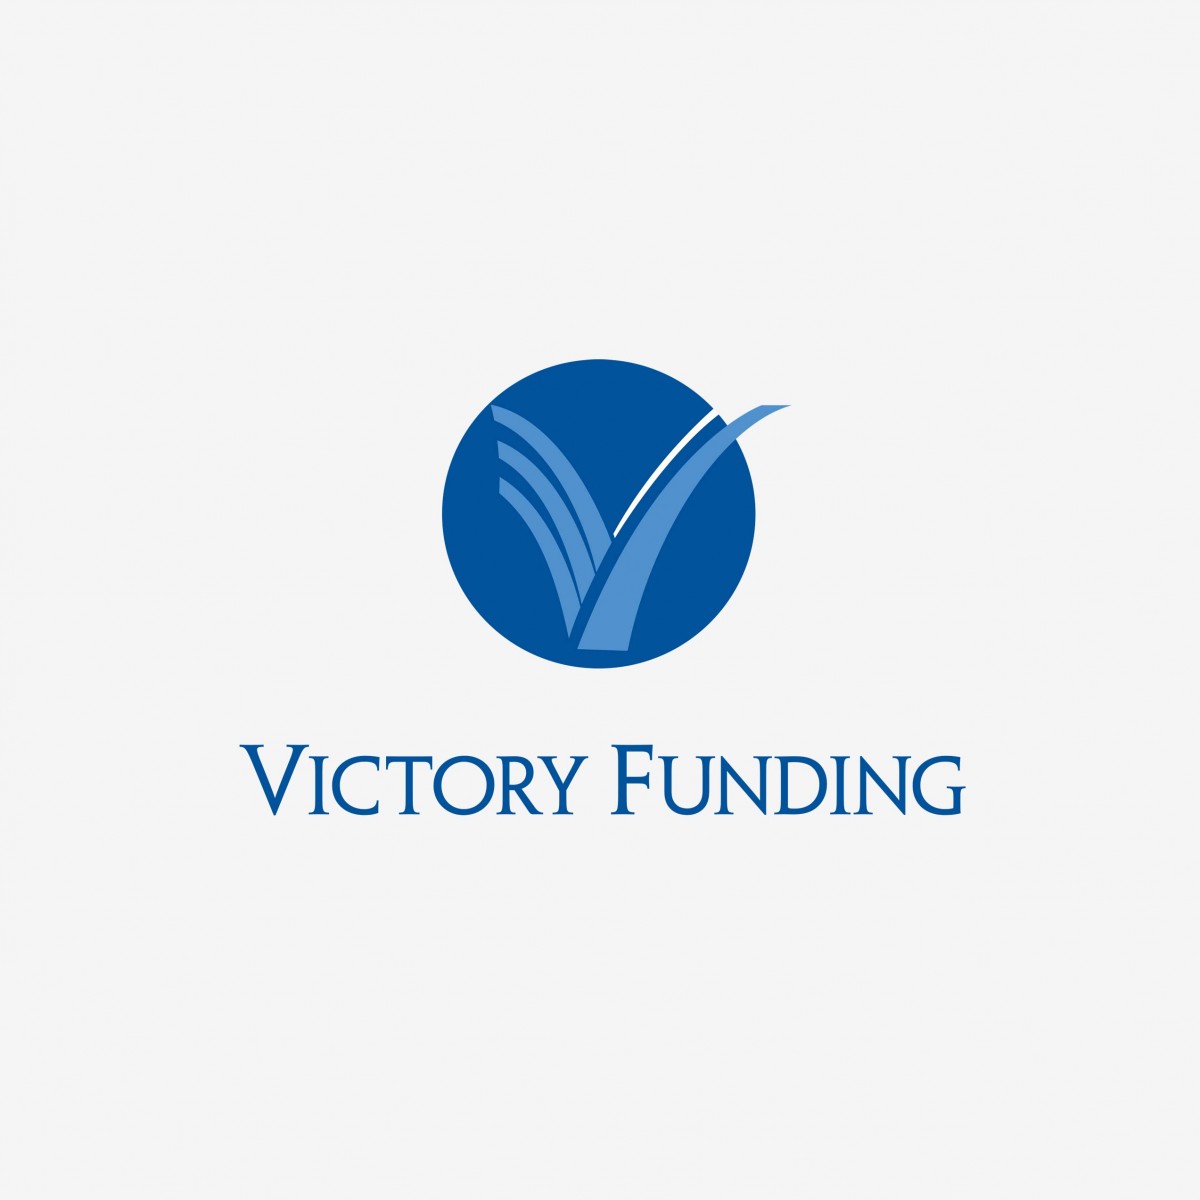 Victory Funding corporate identity